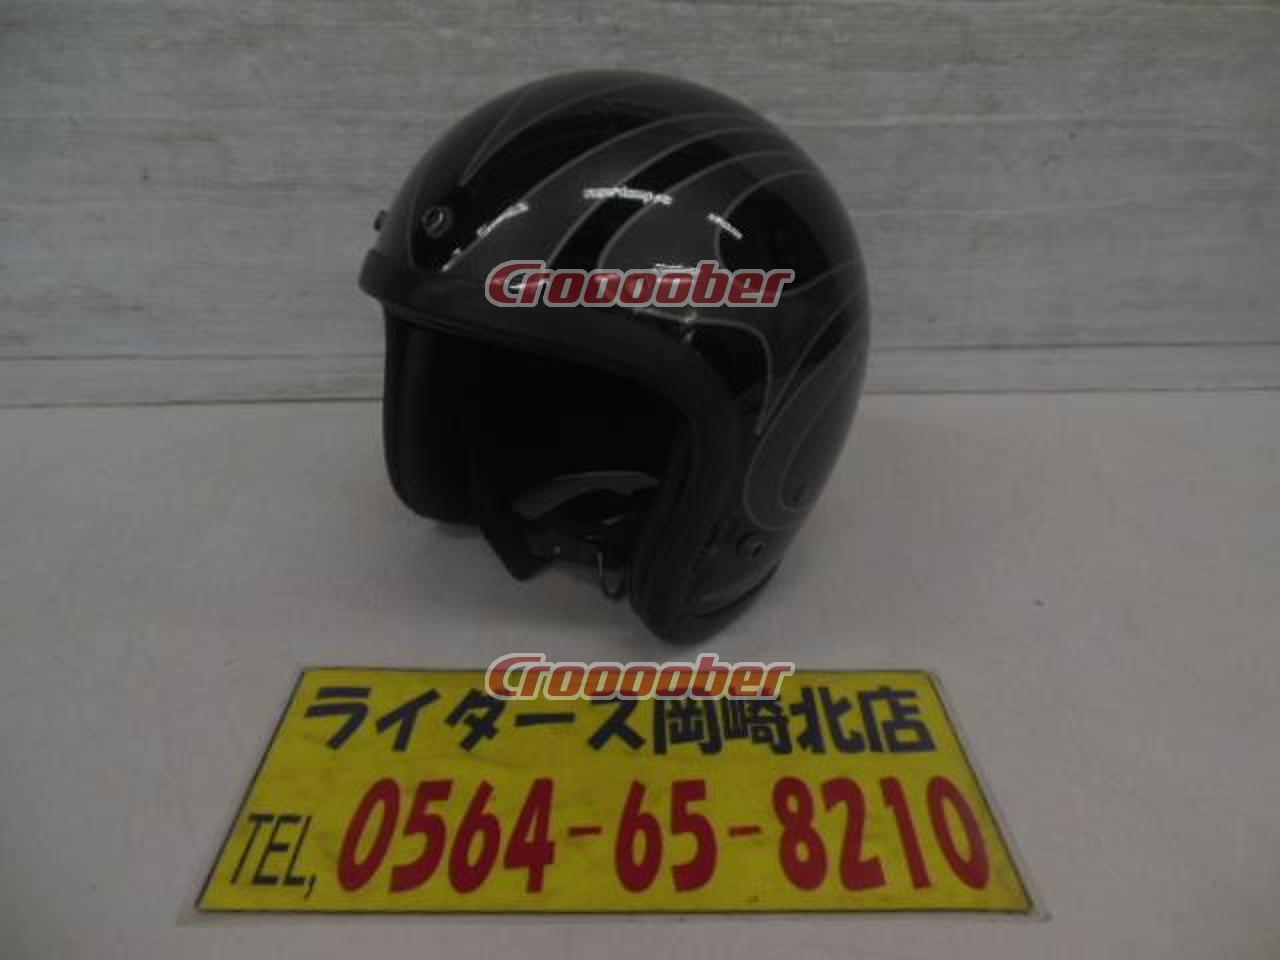 OGK(オージーケー) Spindlle(スピンドル)ジェットヘルメット サイズ:XL 